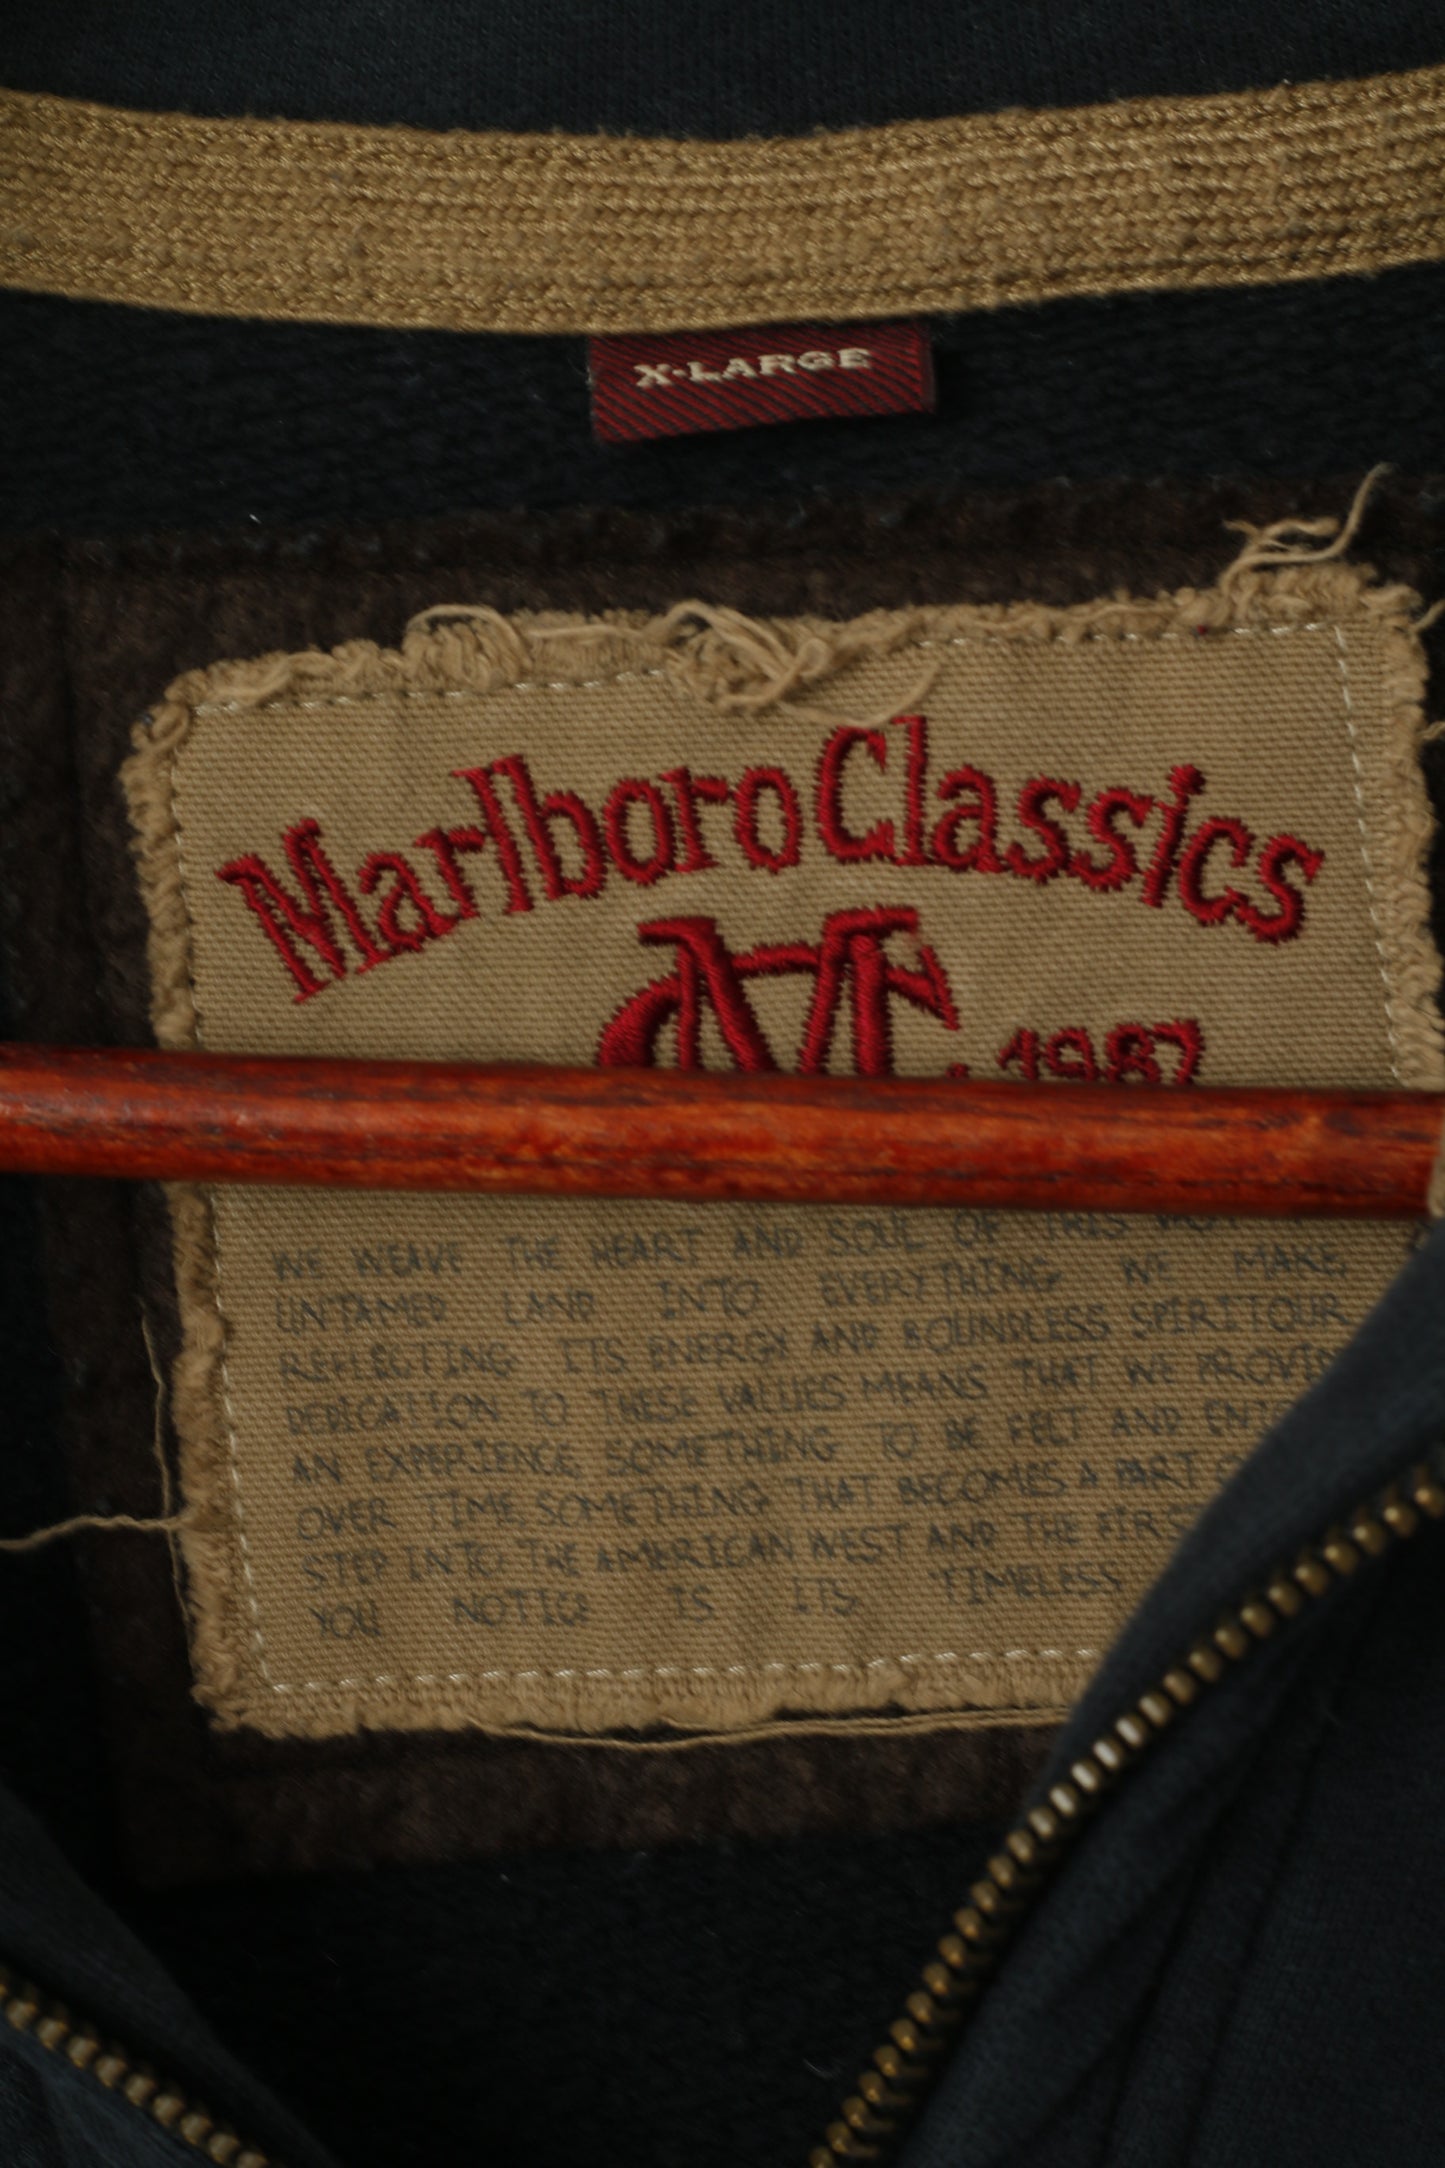 Marlboro Classsics Men XL (L) Sweatshirt Marine Coton Zip Neck vintage Pull Top